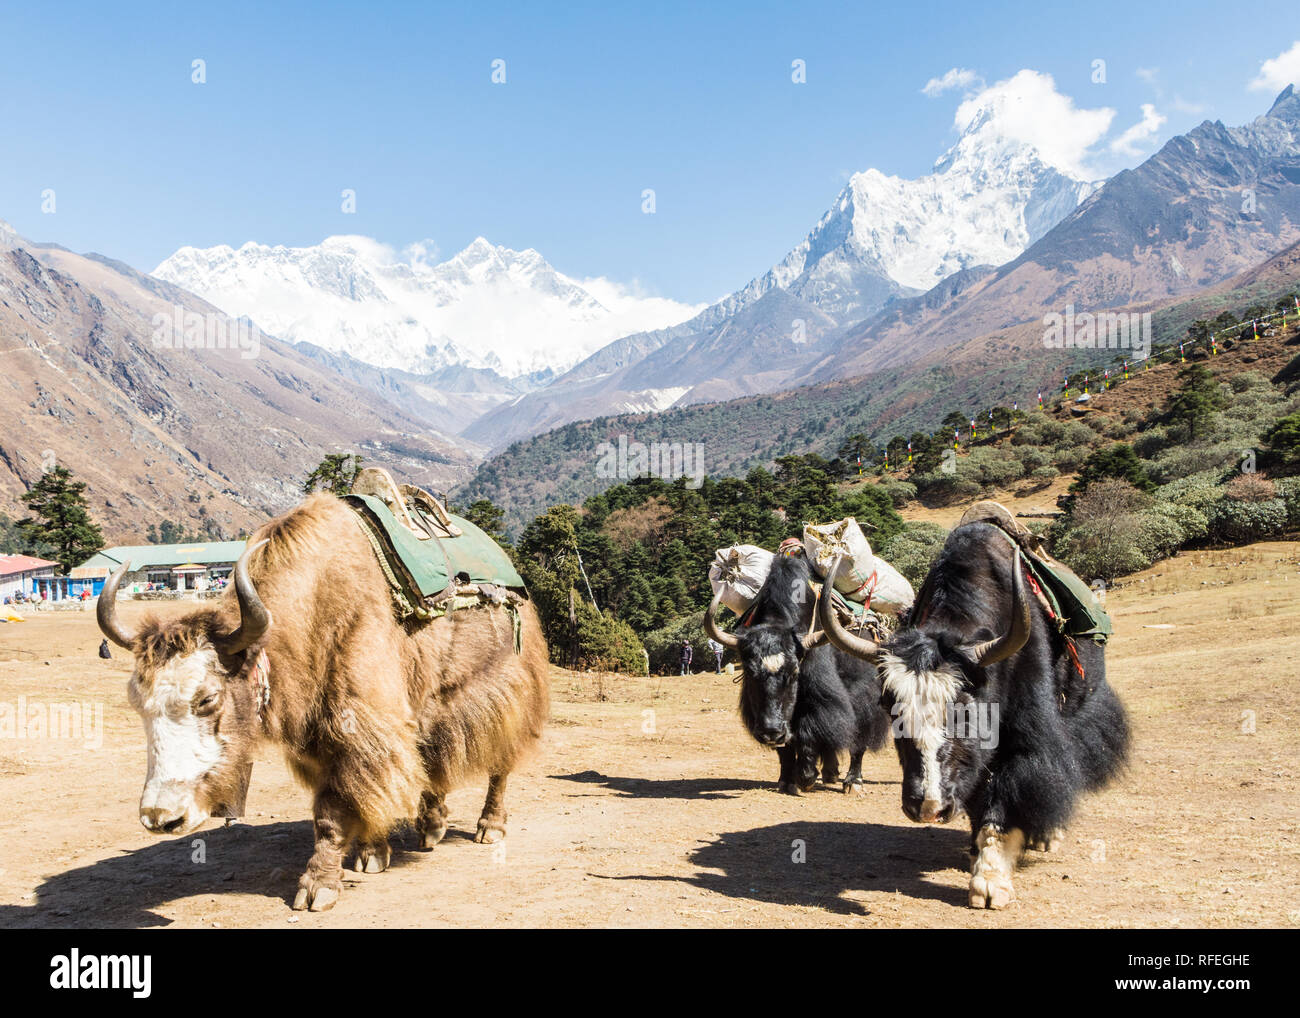 Yaks with long fur in Tengboche with Everest, Lhotse and Ama Dablam mountains in the background, Tengboche, Sagarmatha, Khumbu, Nepal Stock Photo